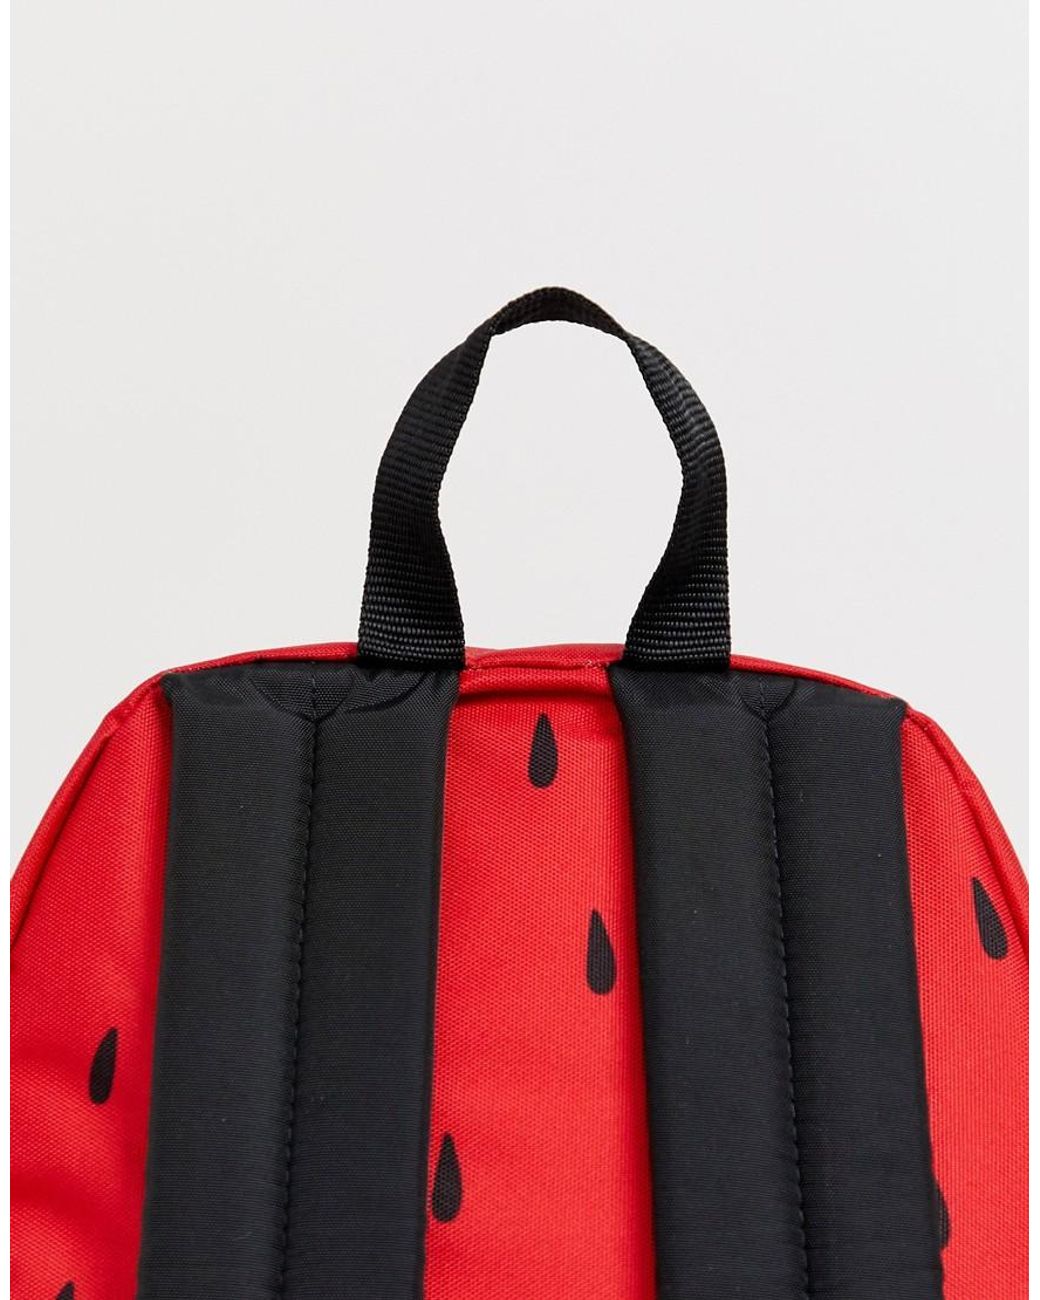 Eastpak Padded Pak'r Backpack In Watermelon Print in Red for Men | Lyst